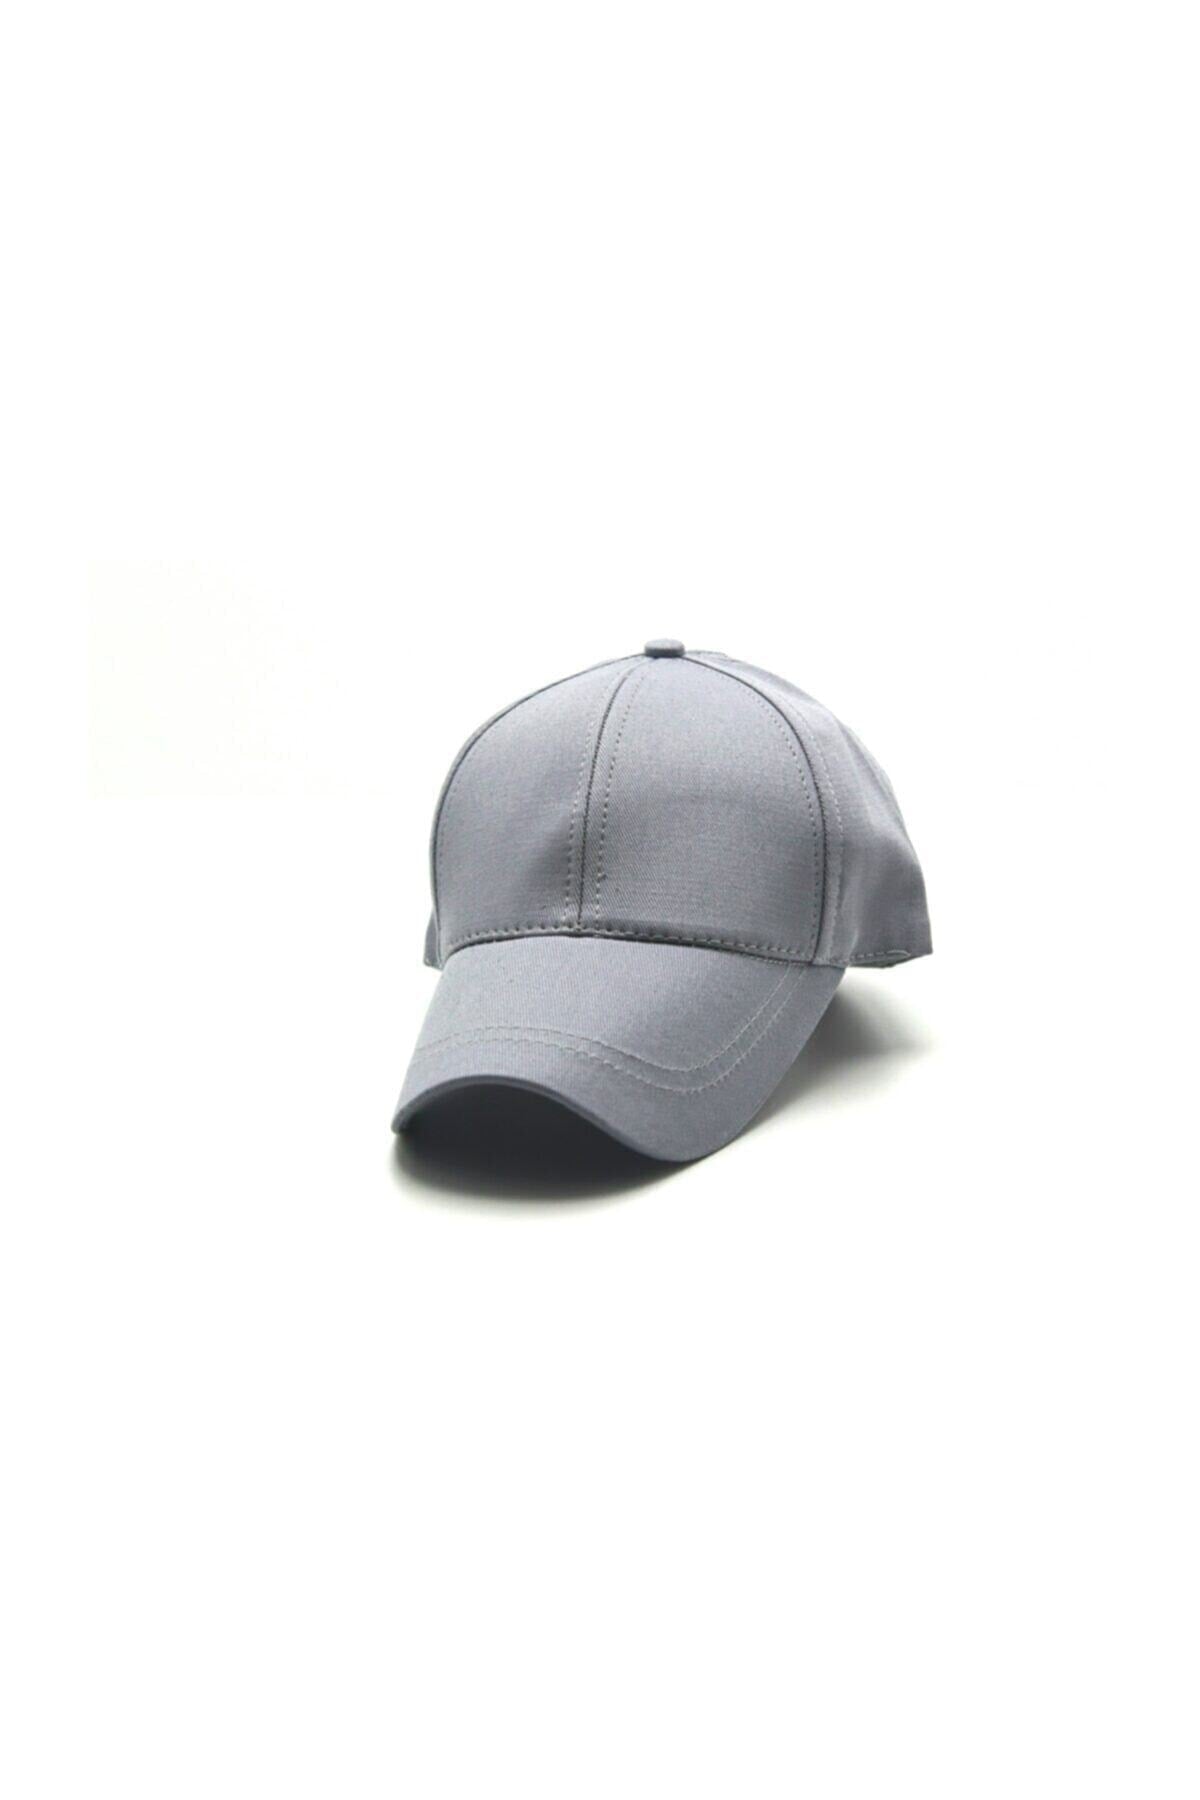 Adjustable Men's-Women's Plain Sports Hat with Velcro Back